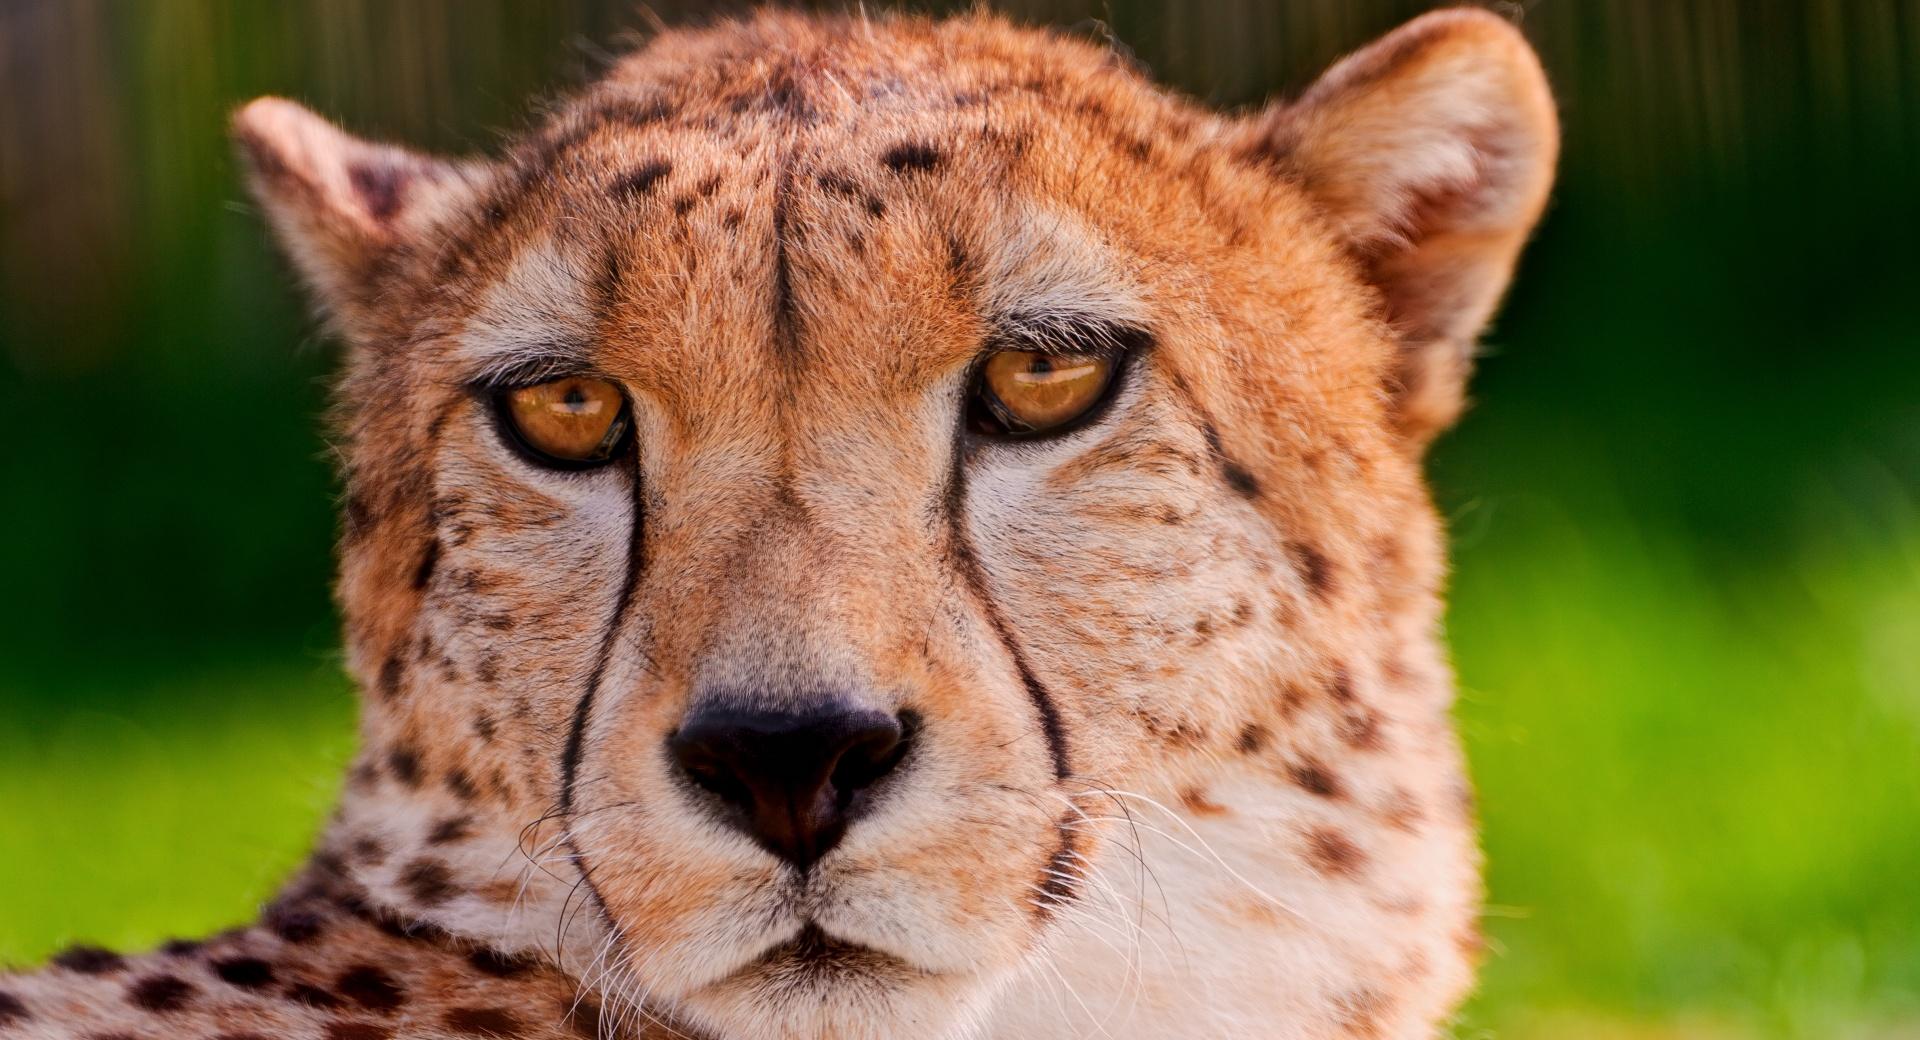 Cheetah Portrait at 1024 x 1024 iPad size wallpapers HD quality